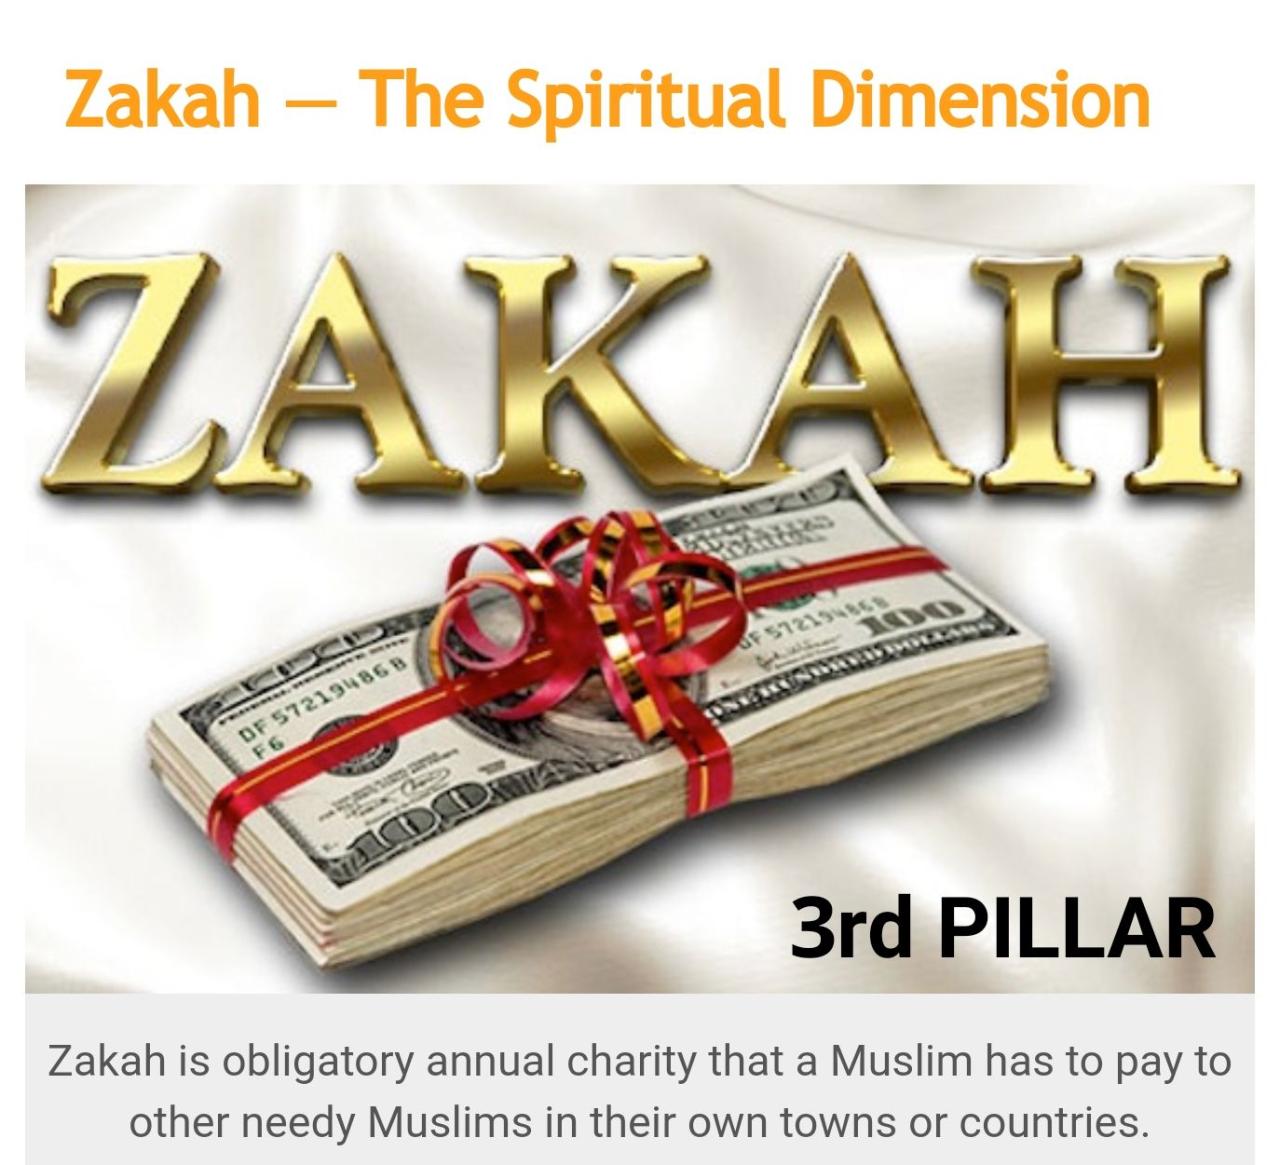 Zakat charity zakah pillars mercy decree encompasses righteous obligatory